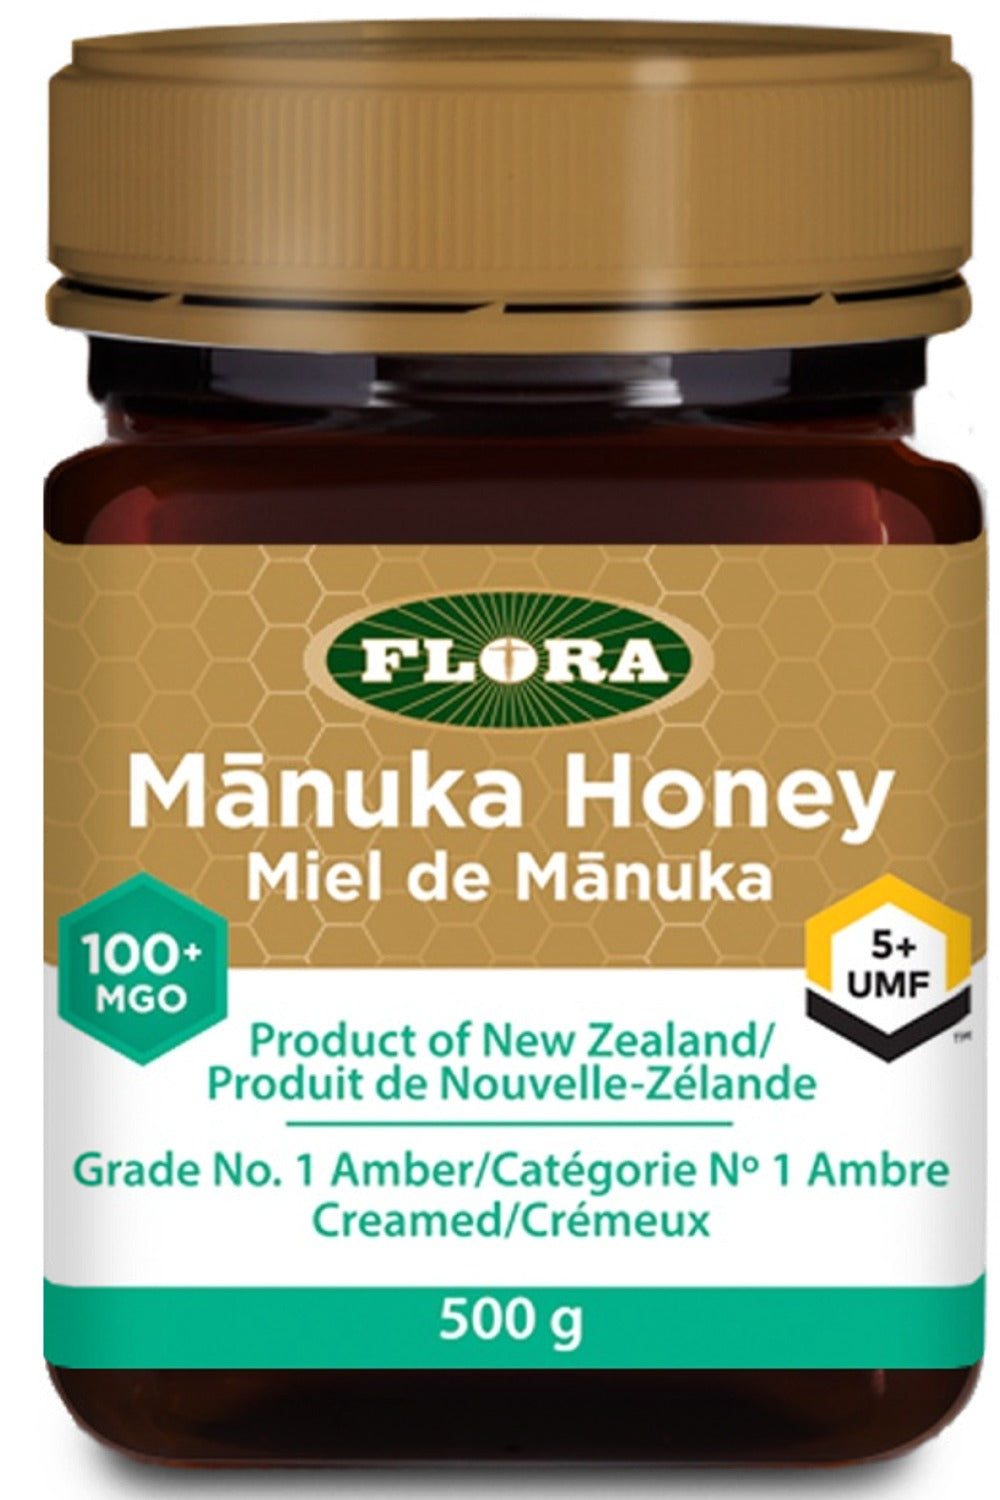 Flora Manuka Honey MGO 100+/5+ UMF ( gr